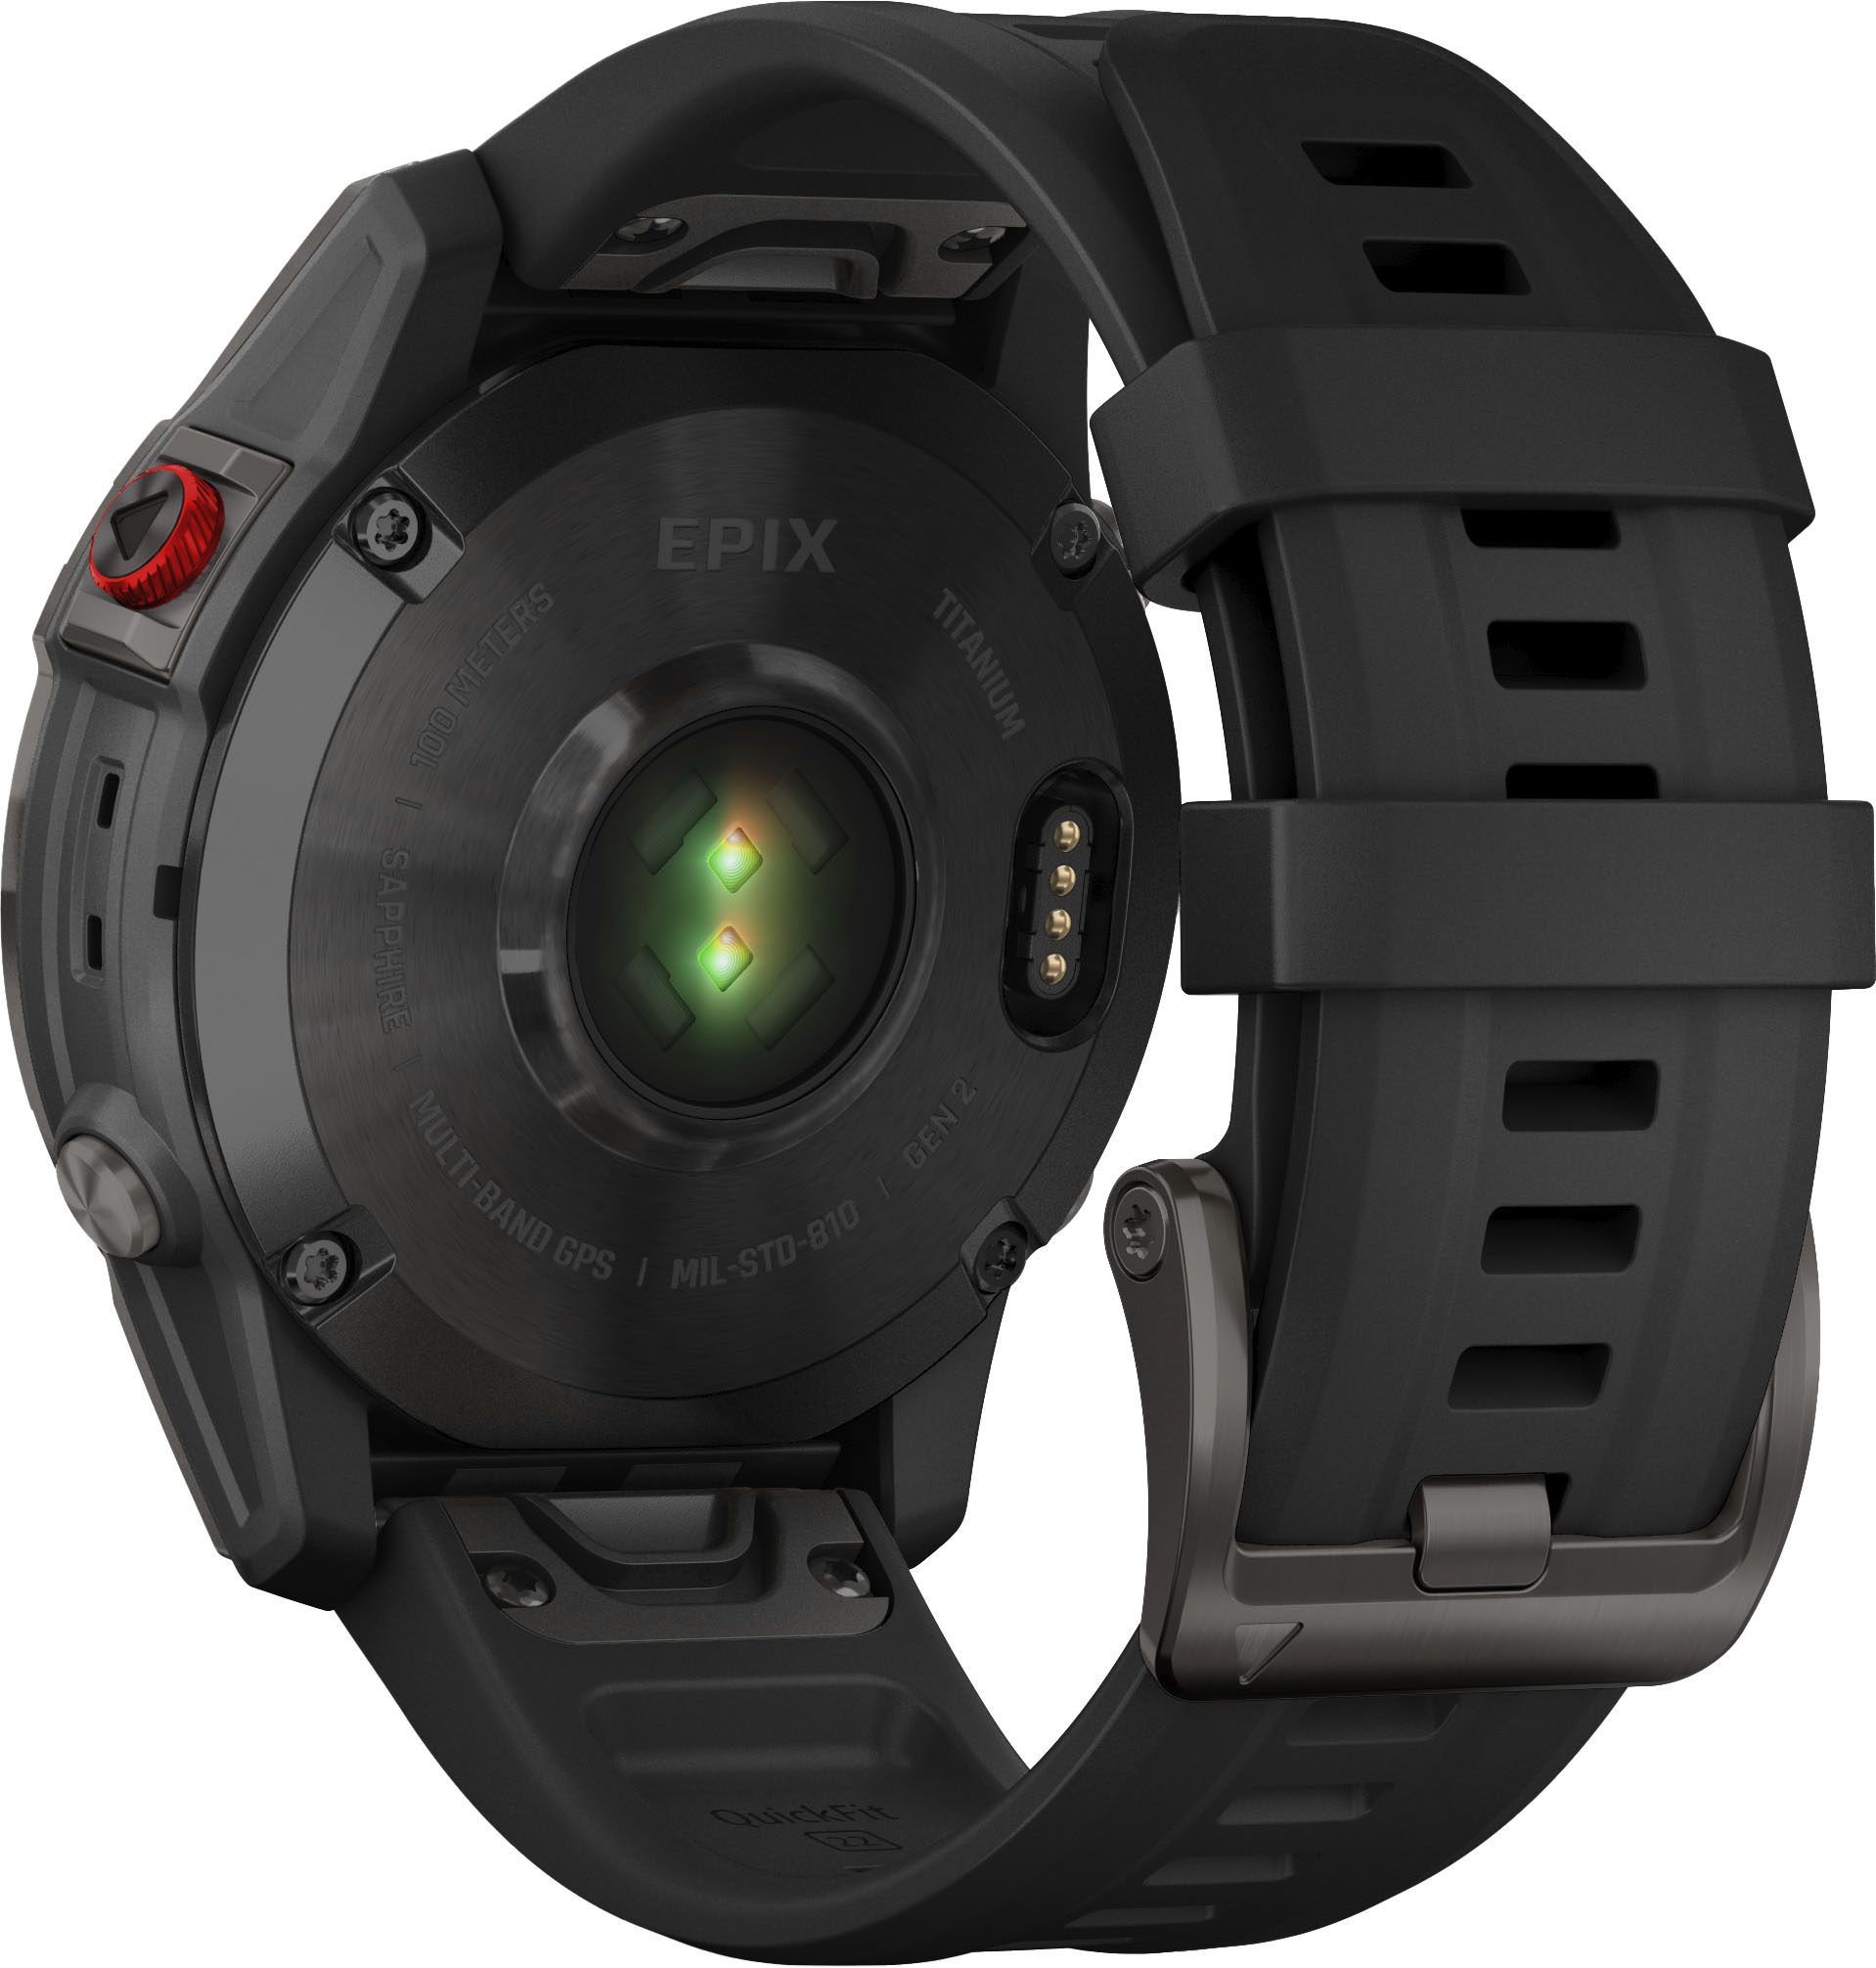 Garmin Epix Gen 2 Review: The Smart Watch Carrying on the Baton of